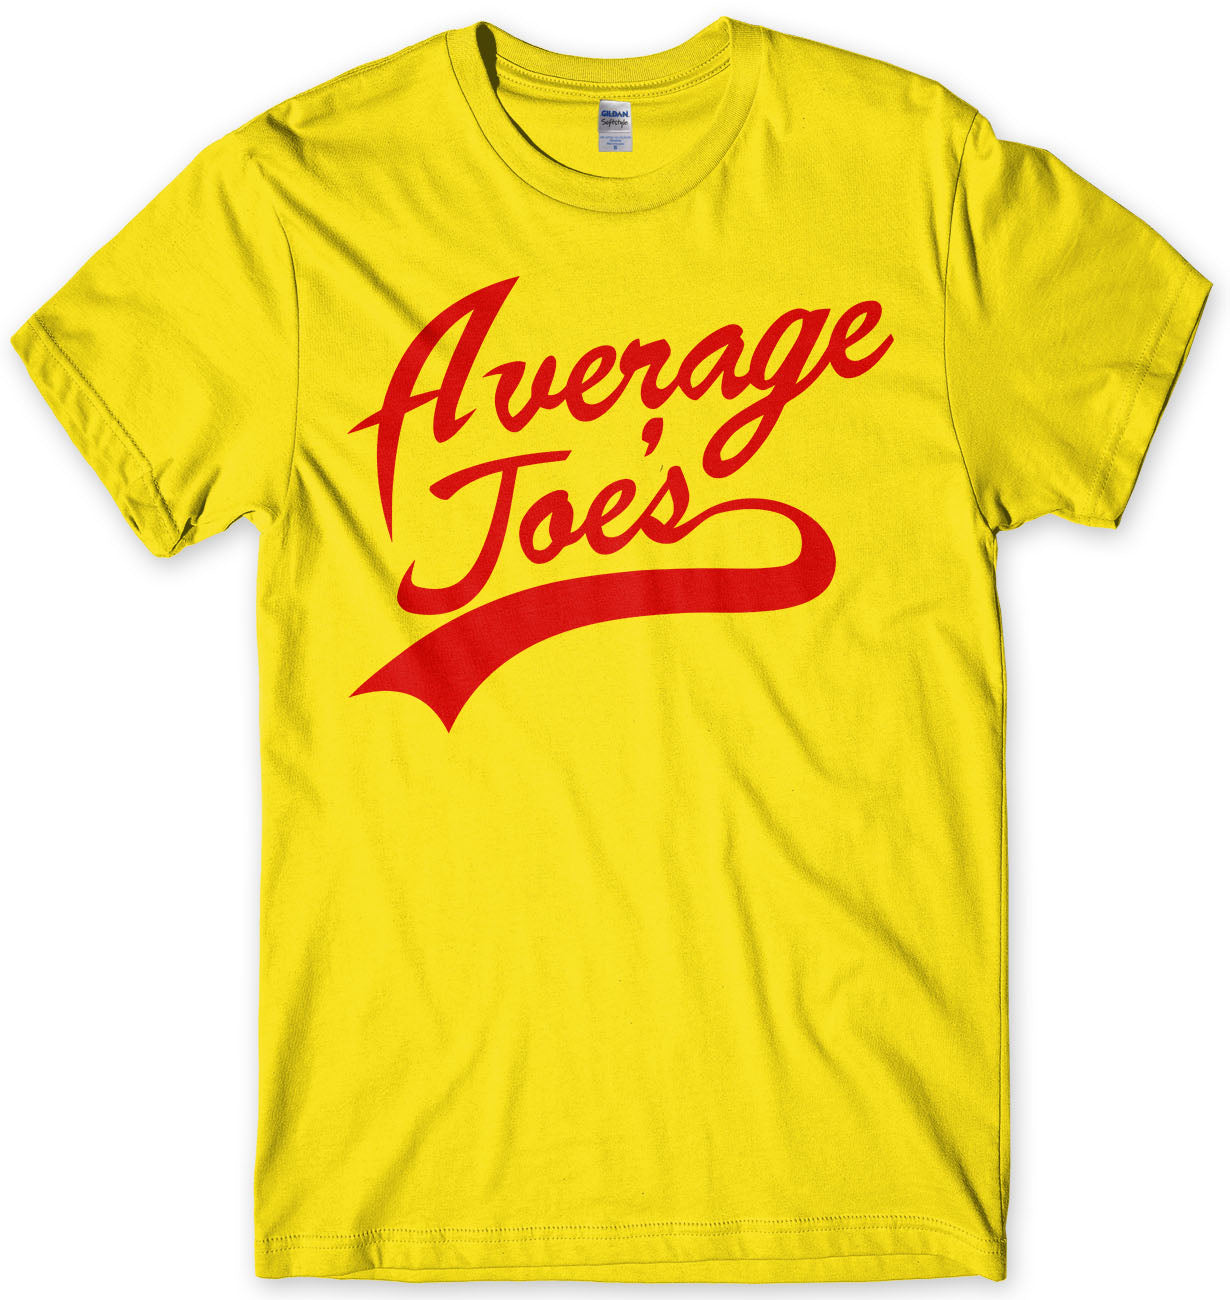 Average Joes Inspired Mens T-Shirt - StreetSide Surgeons